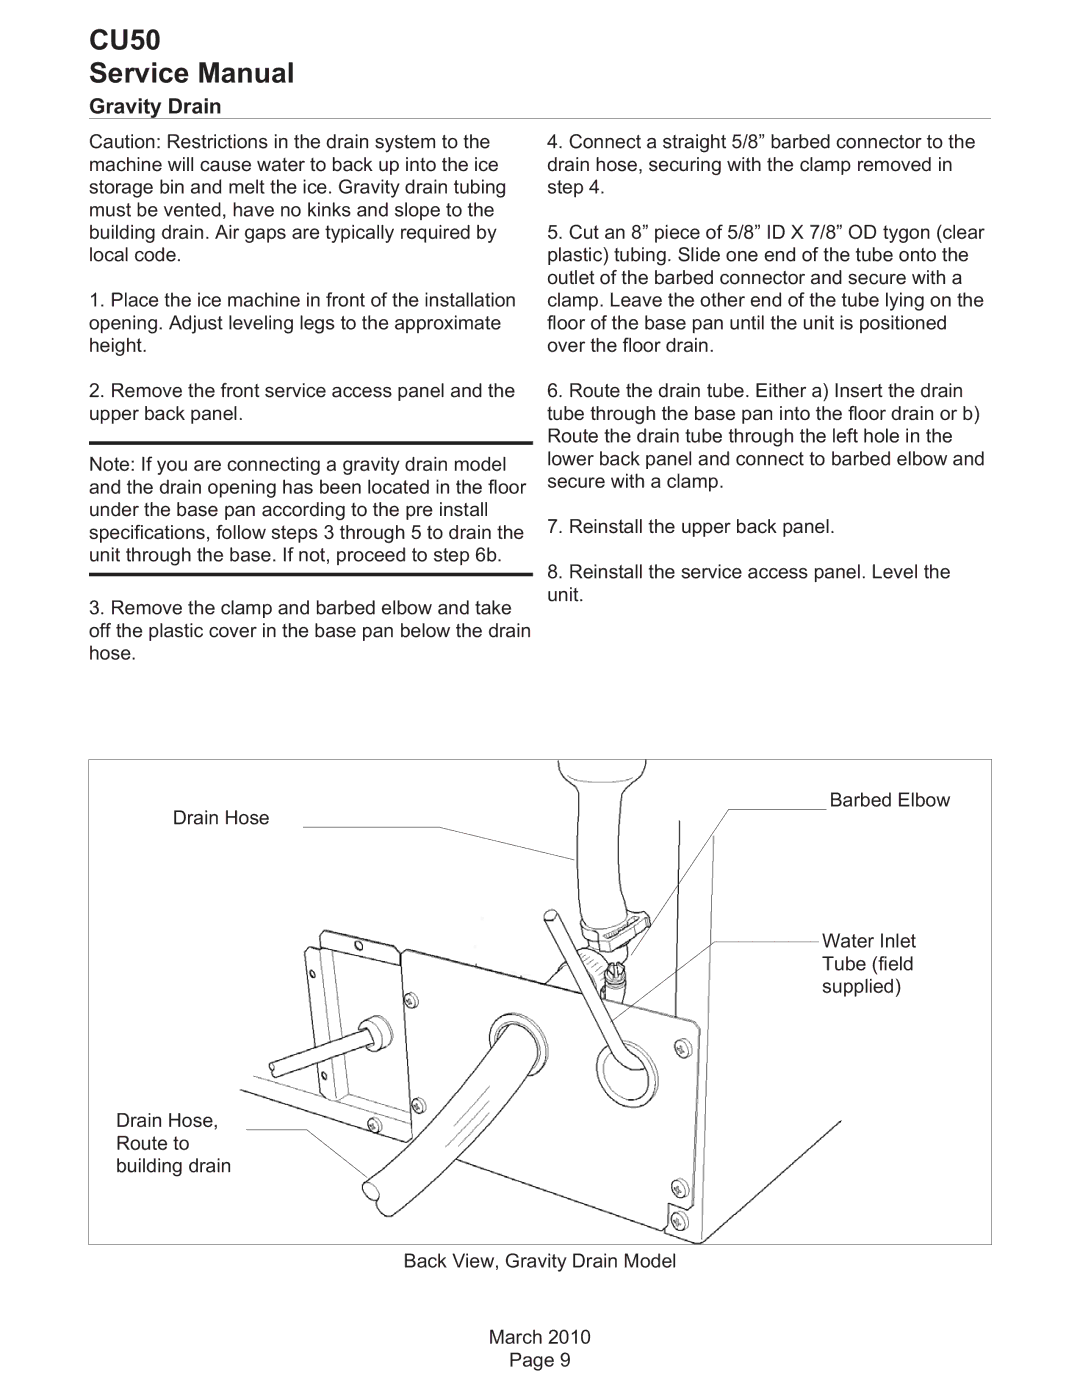 Scotsman Ice CU50 service manual Gravity Drain 